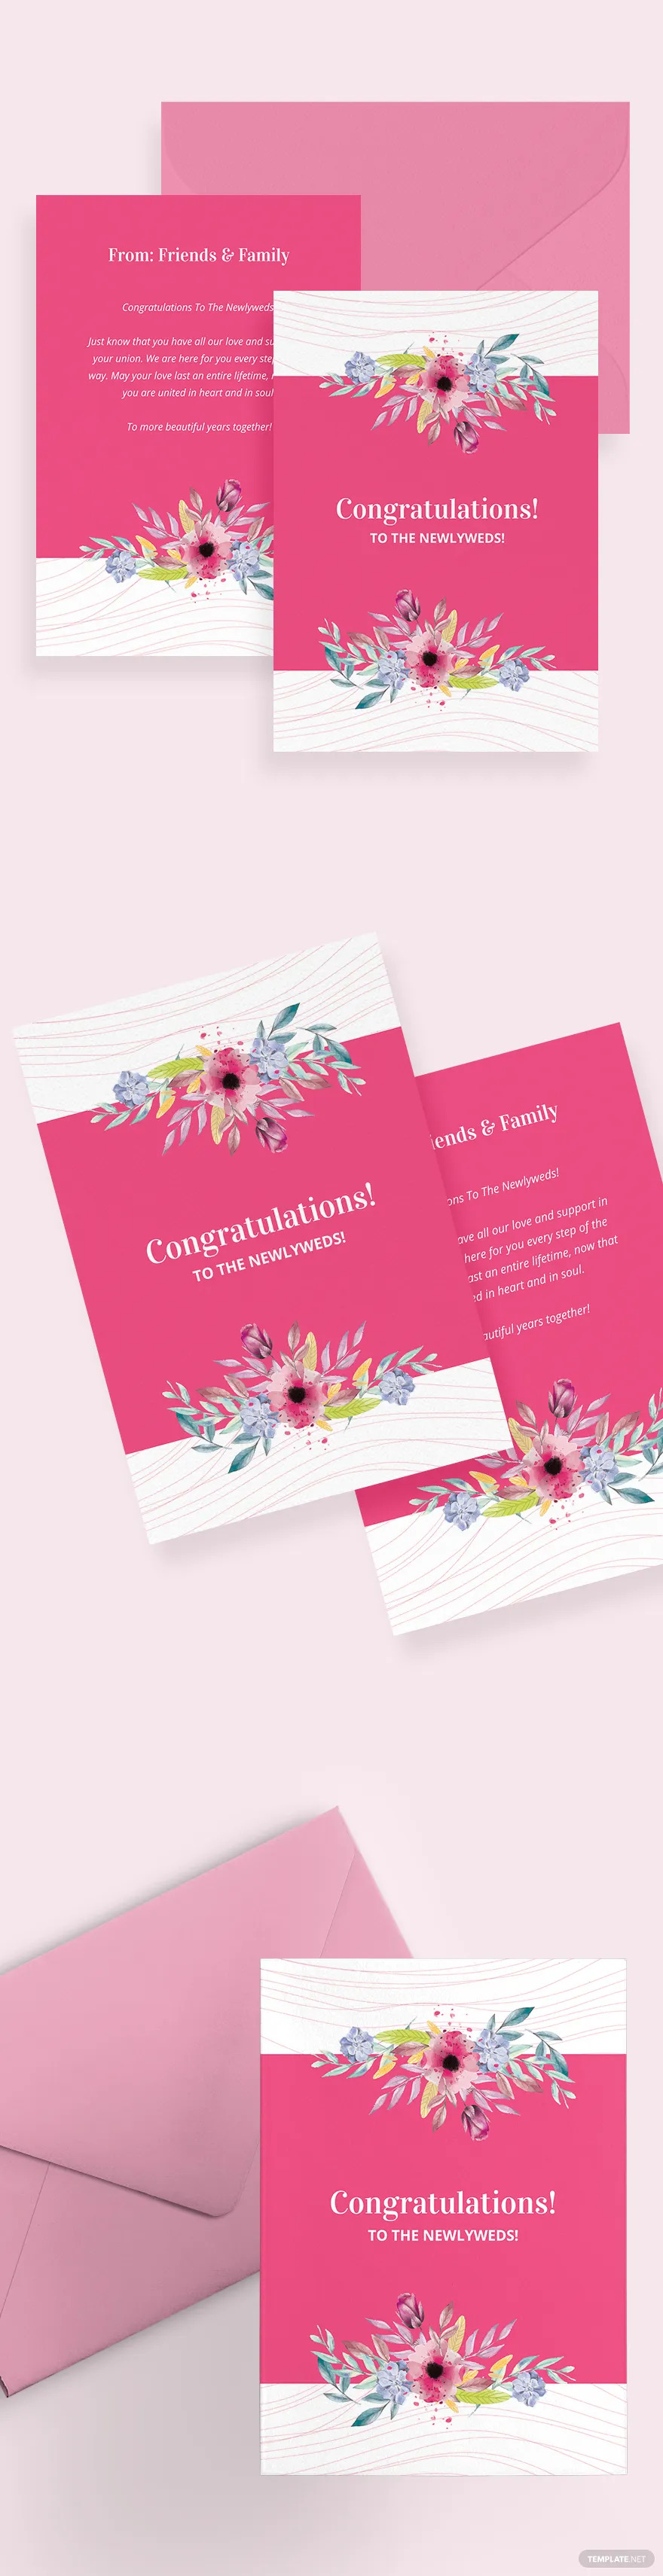 wedding-congratulations-greeting-card